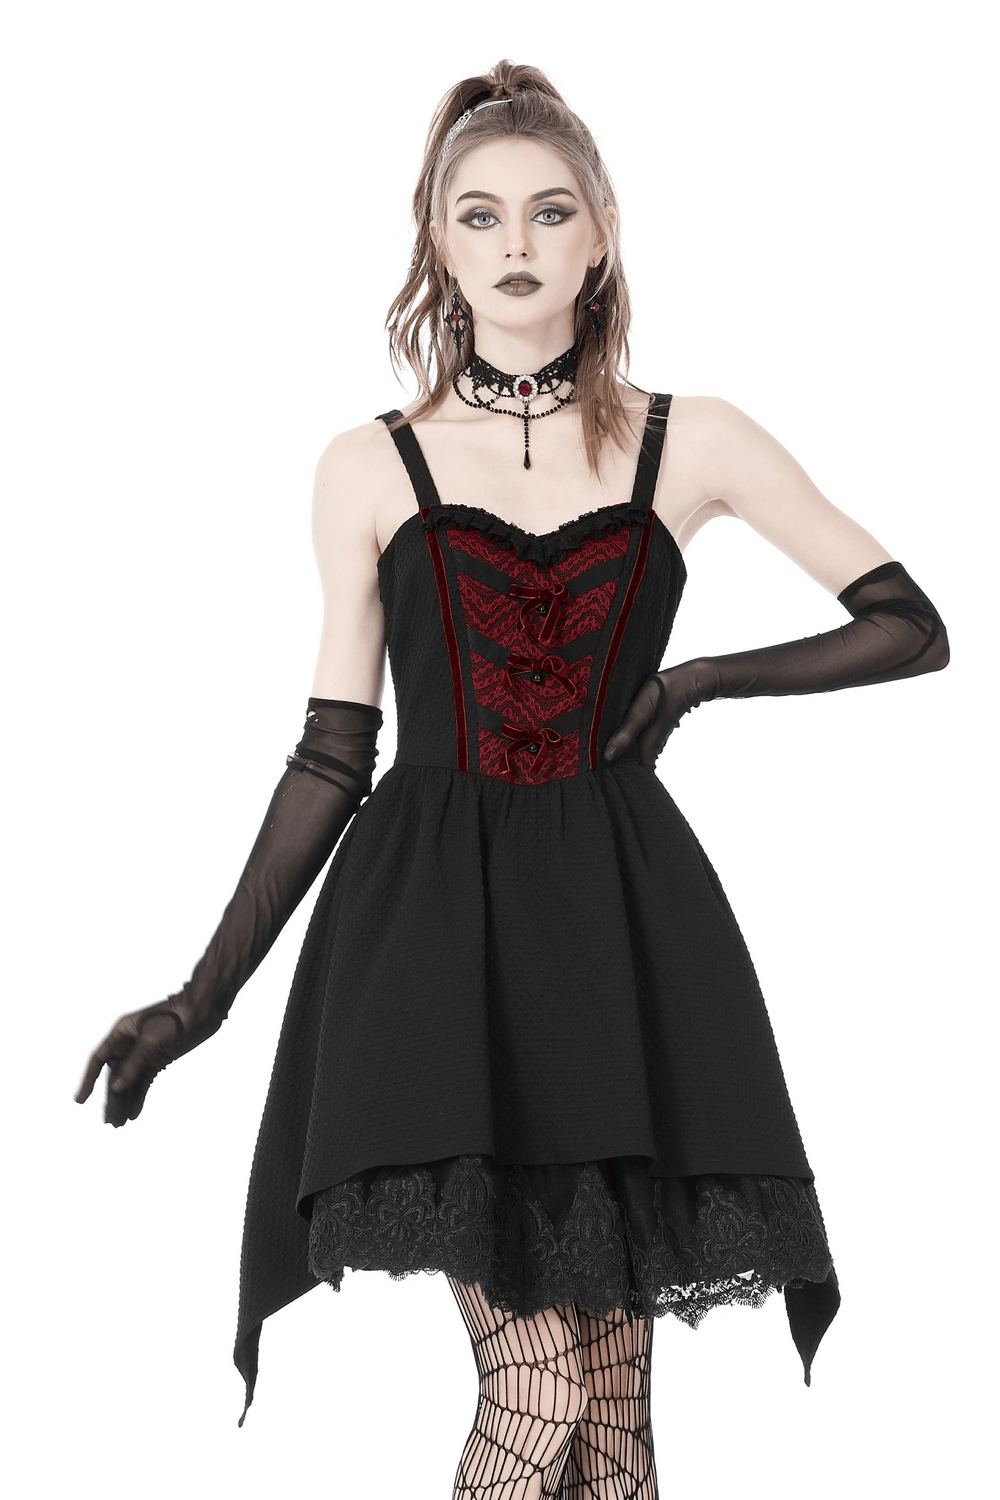 Elegant Black Straps Dress with Red Lace Detailing